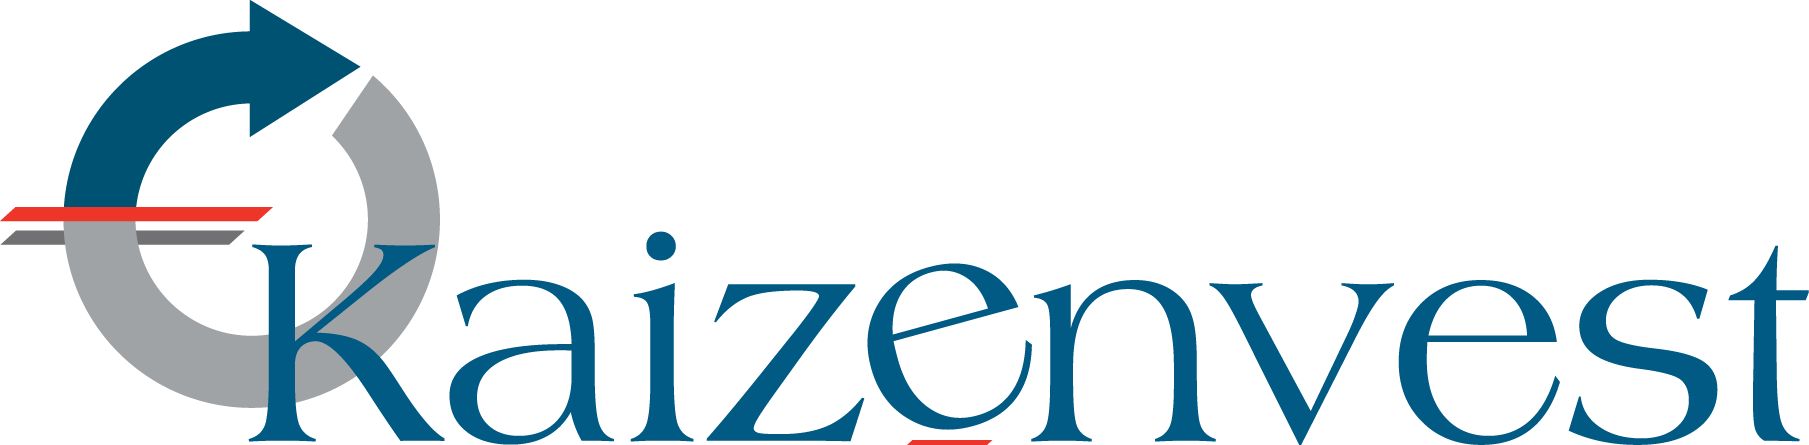 Kaizenvest Logo